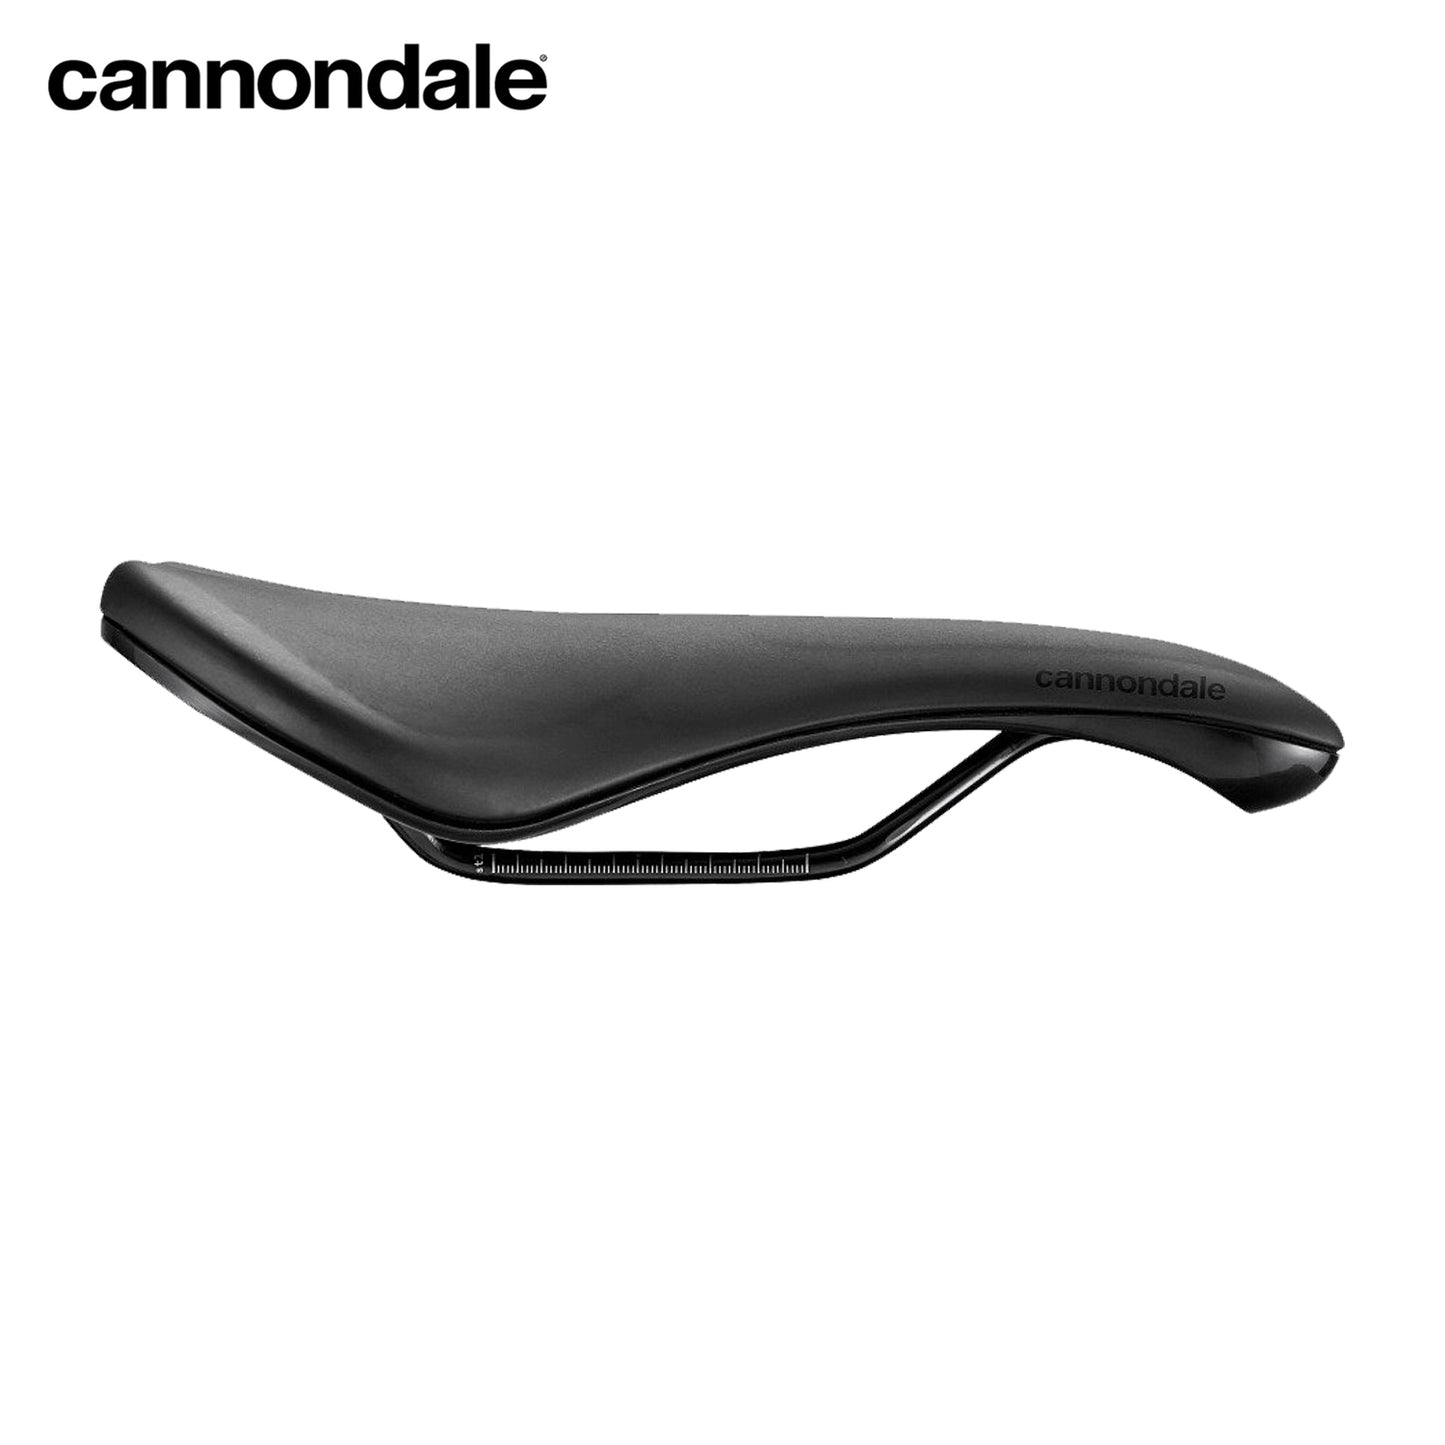 Cannondale Scoop Steel Gel Radius Saddle 155mm - Black